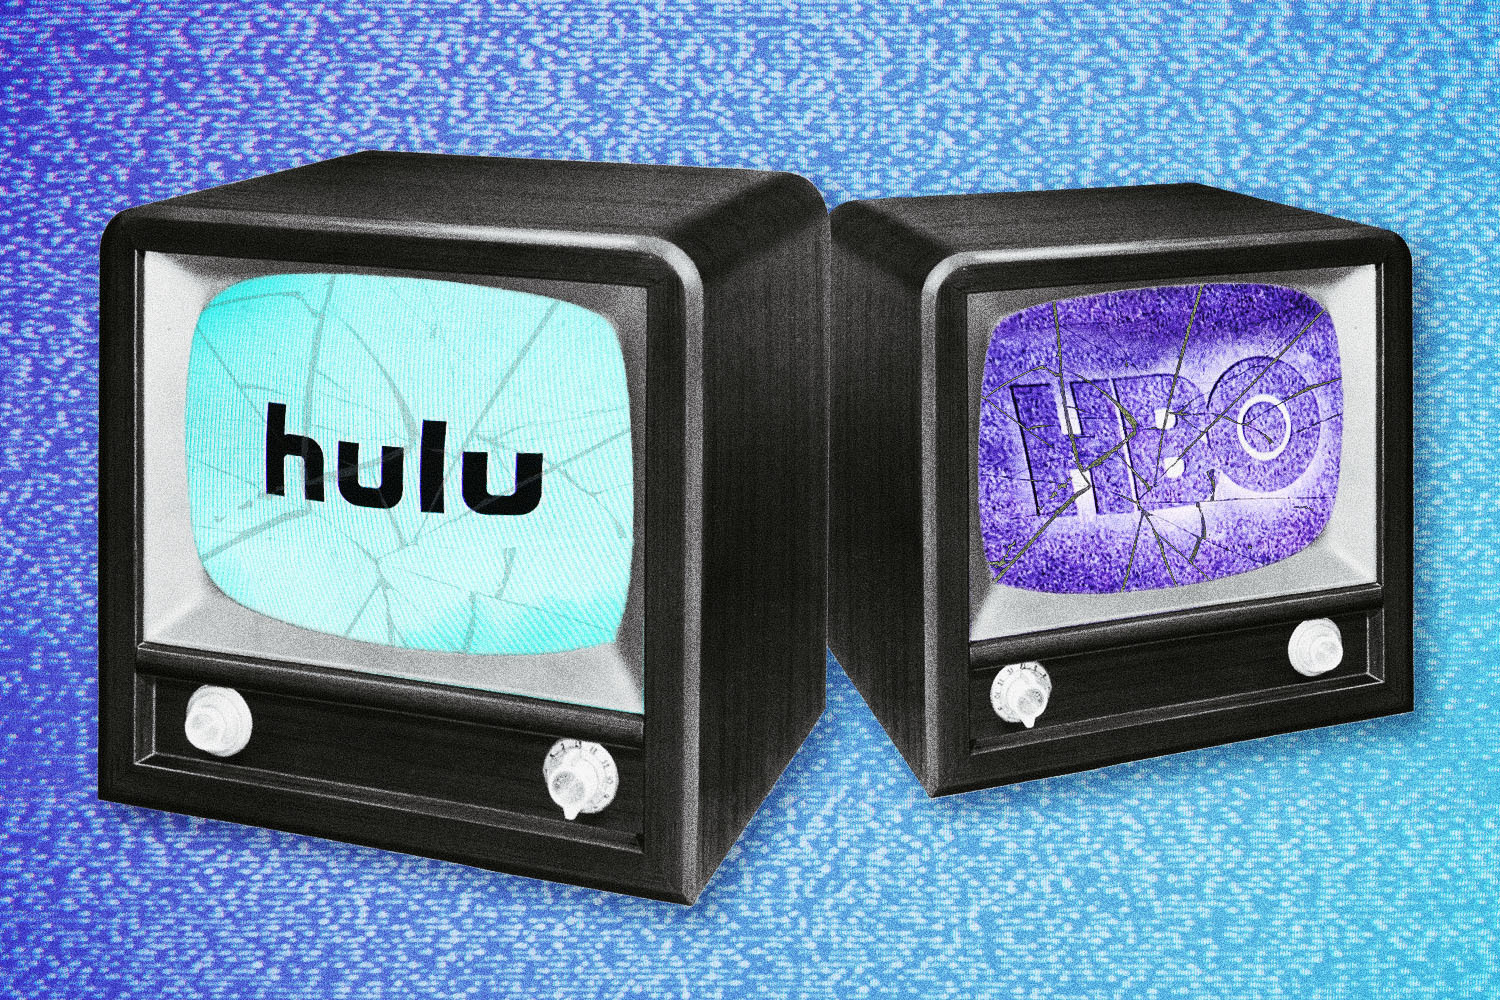 Streaming Service Logos: TV Streaming Platforms And Their Logos